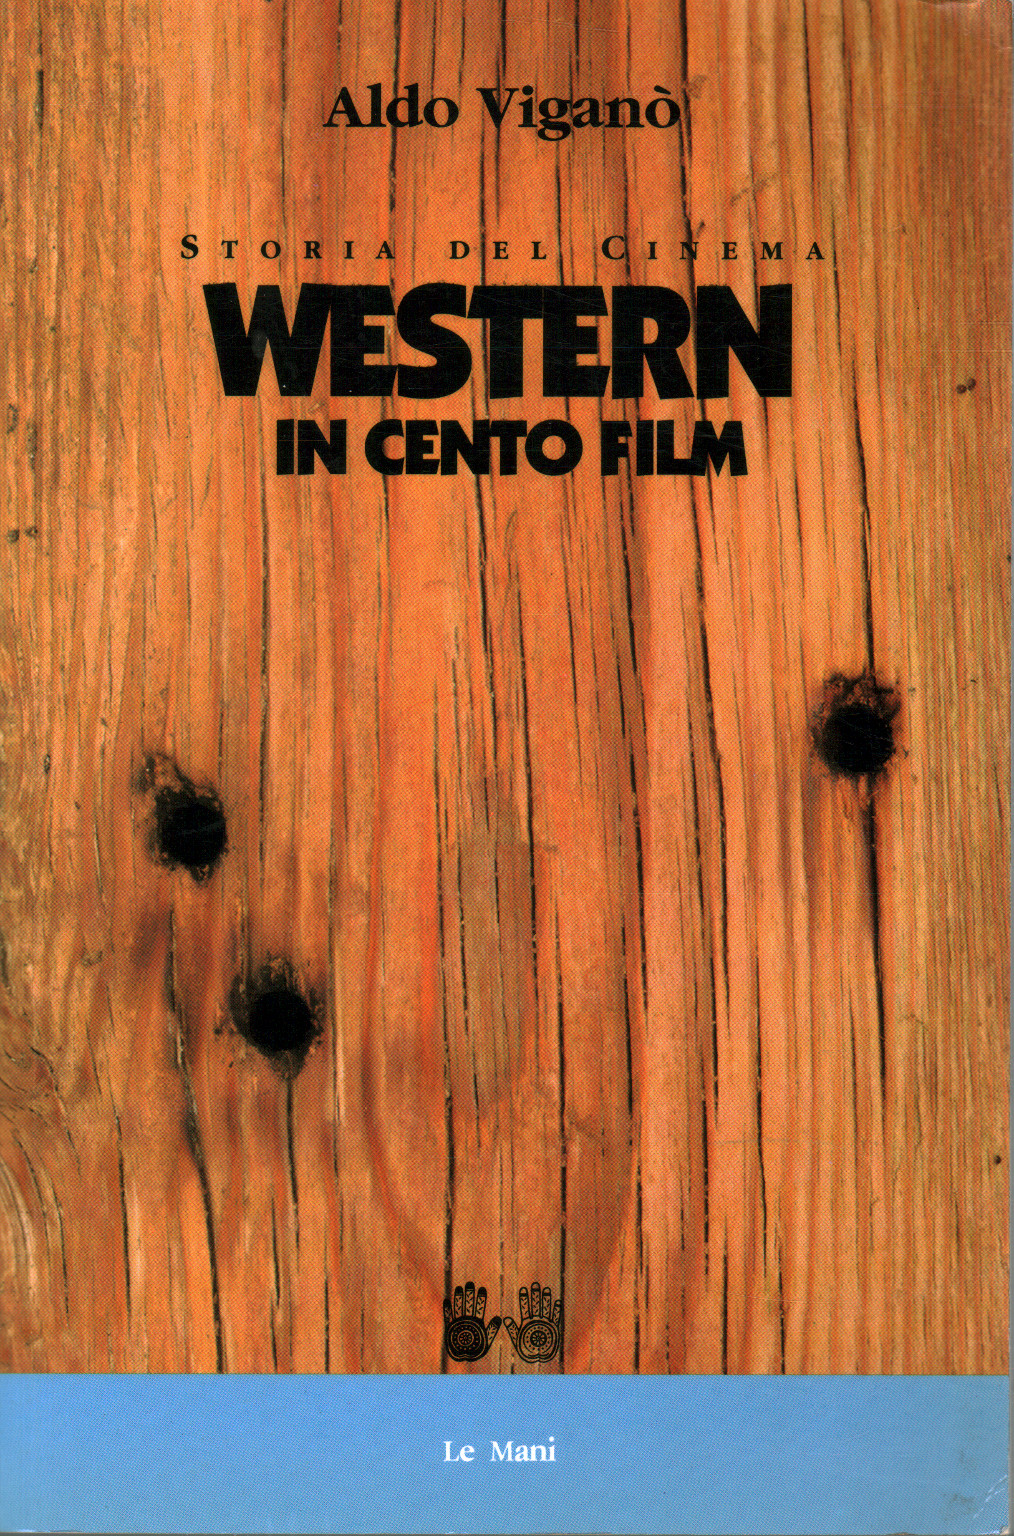 Western-prozent-filme, s.zu.